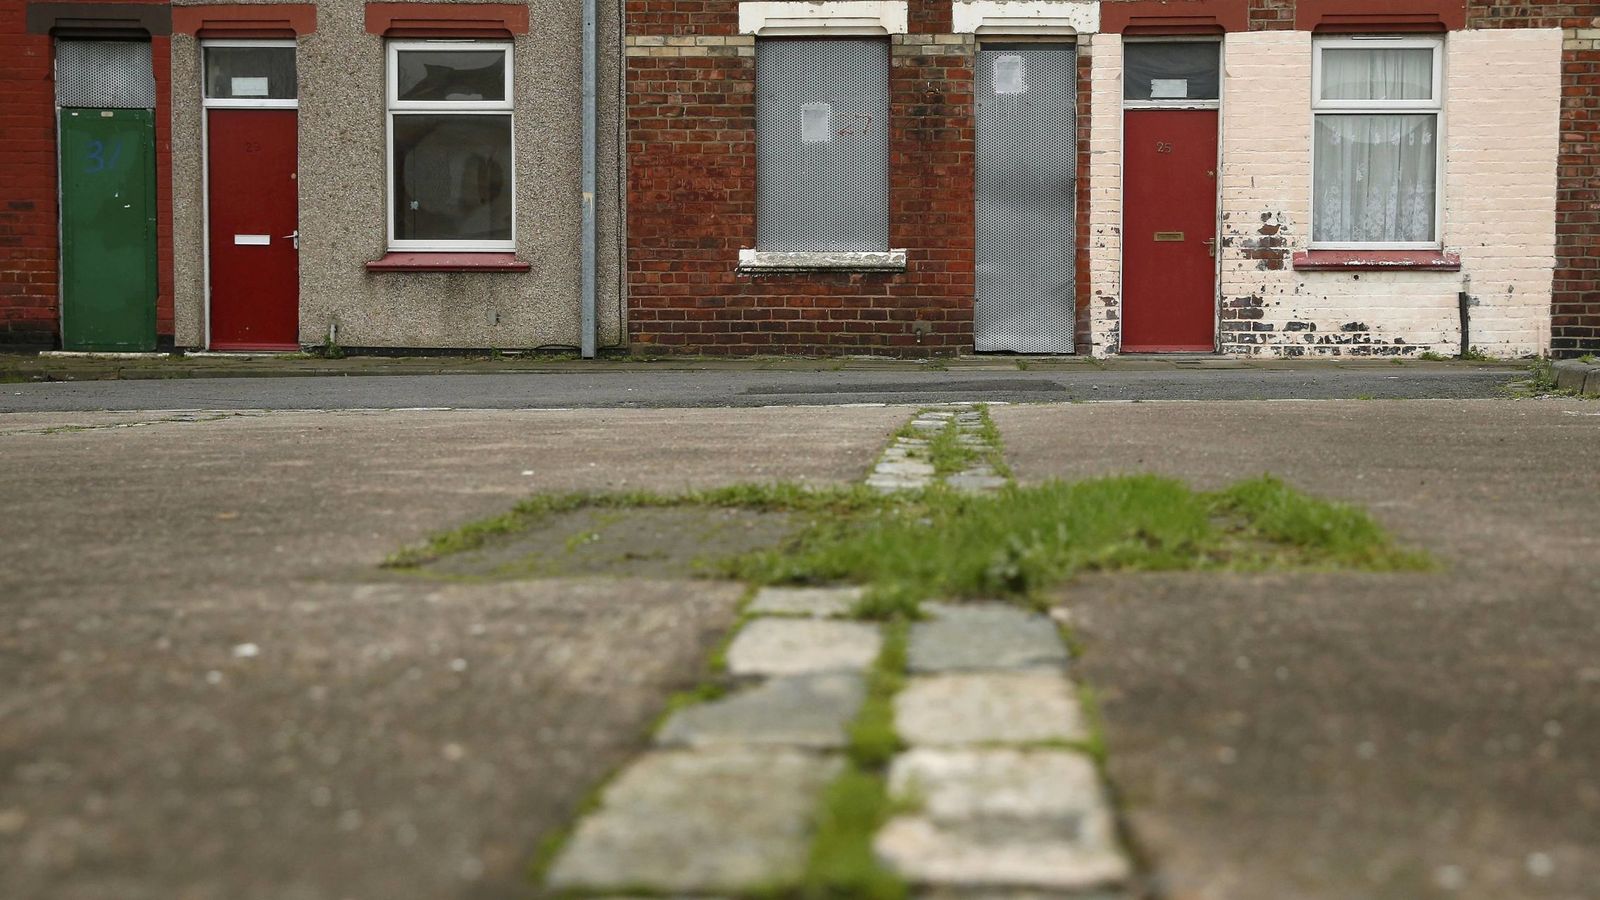 Foto: Casas con puertas rojas, asignadas a solicitantes de asilo, en Middlesbrough, Reino Unido. (Reuters)